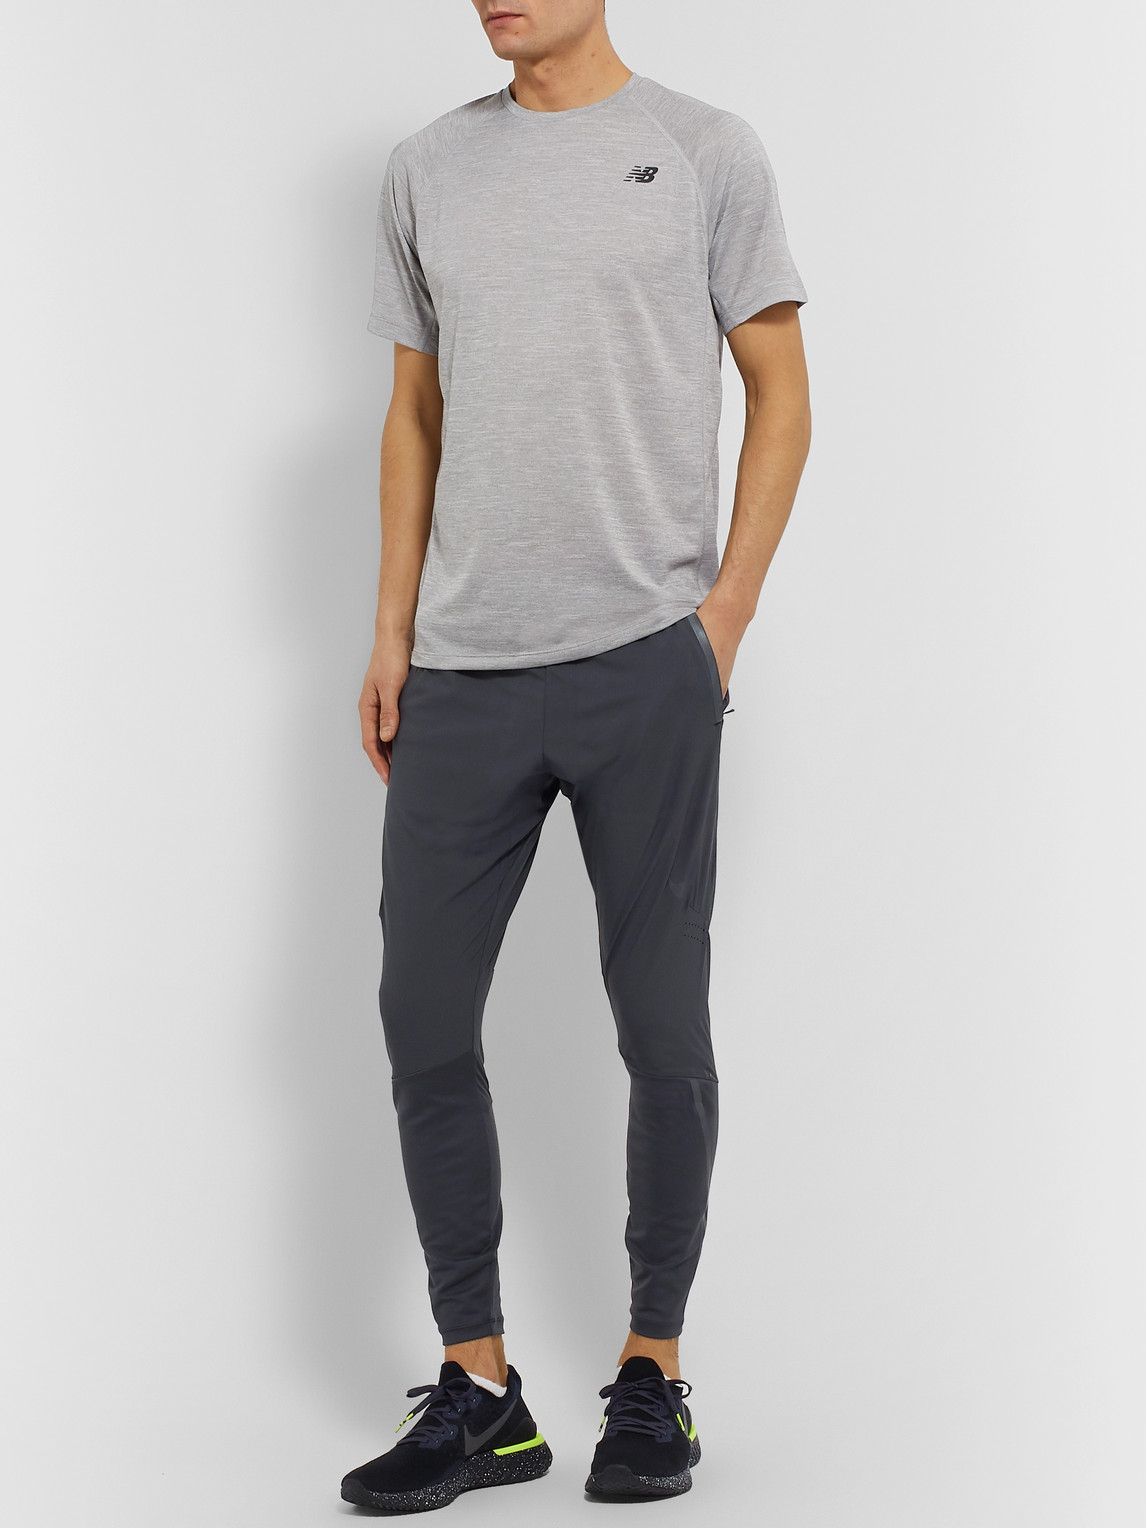 New Balance Tenacity Slim-fit Mélange Jersey T-shirt In Grey